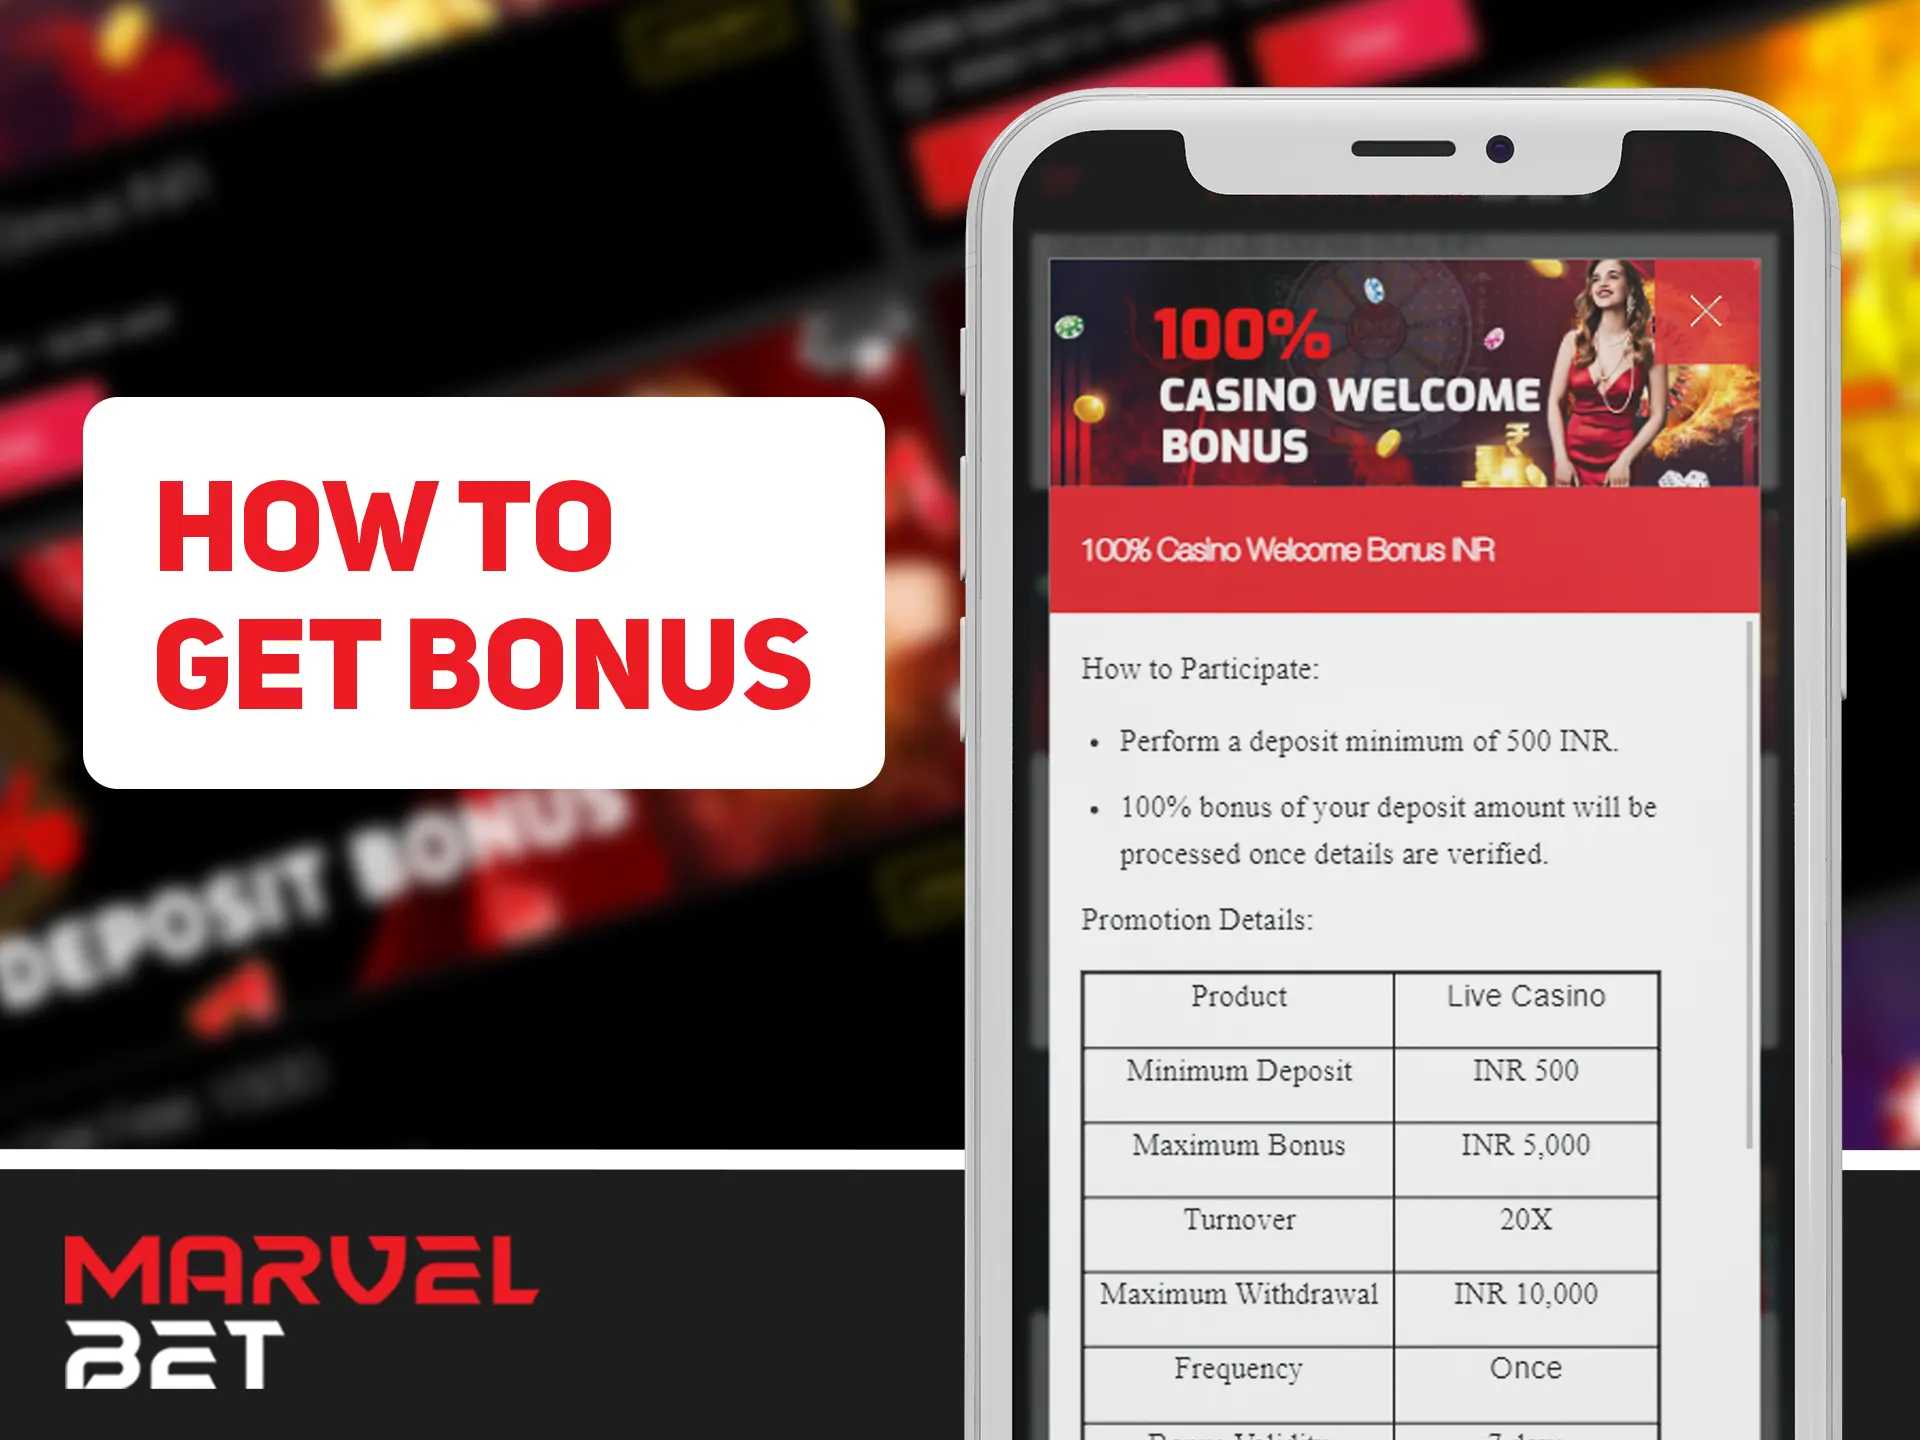 Get your Marvelbet bonus with simple steps.